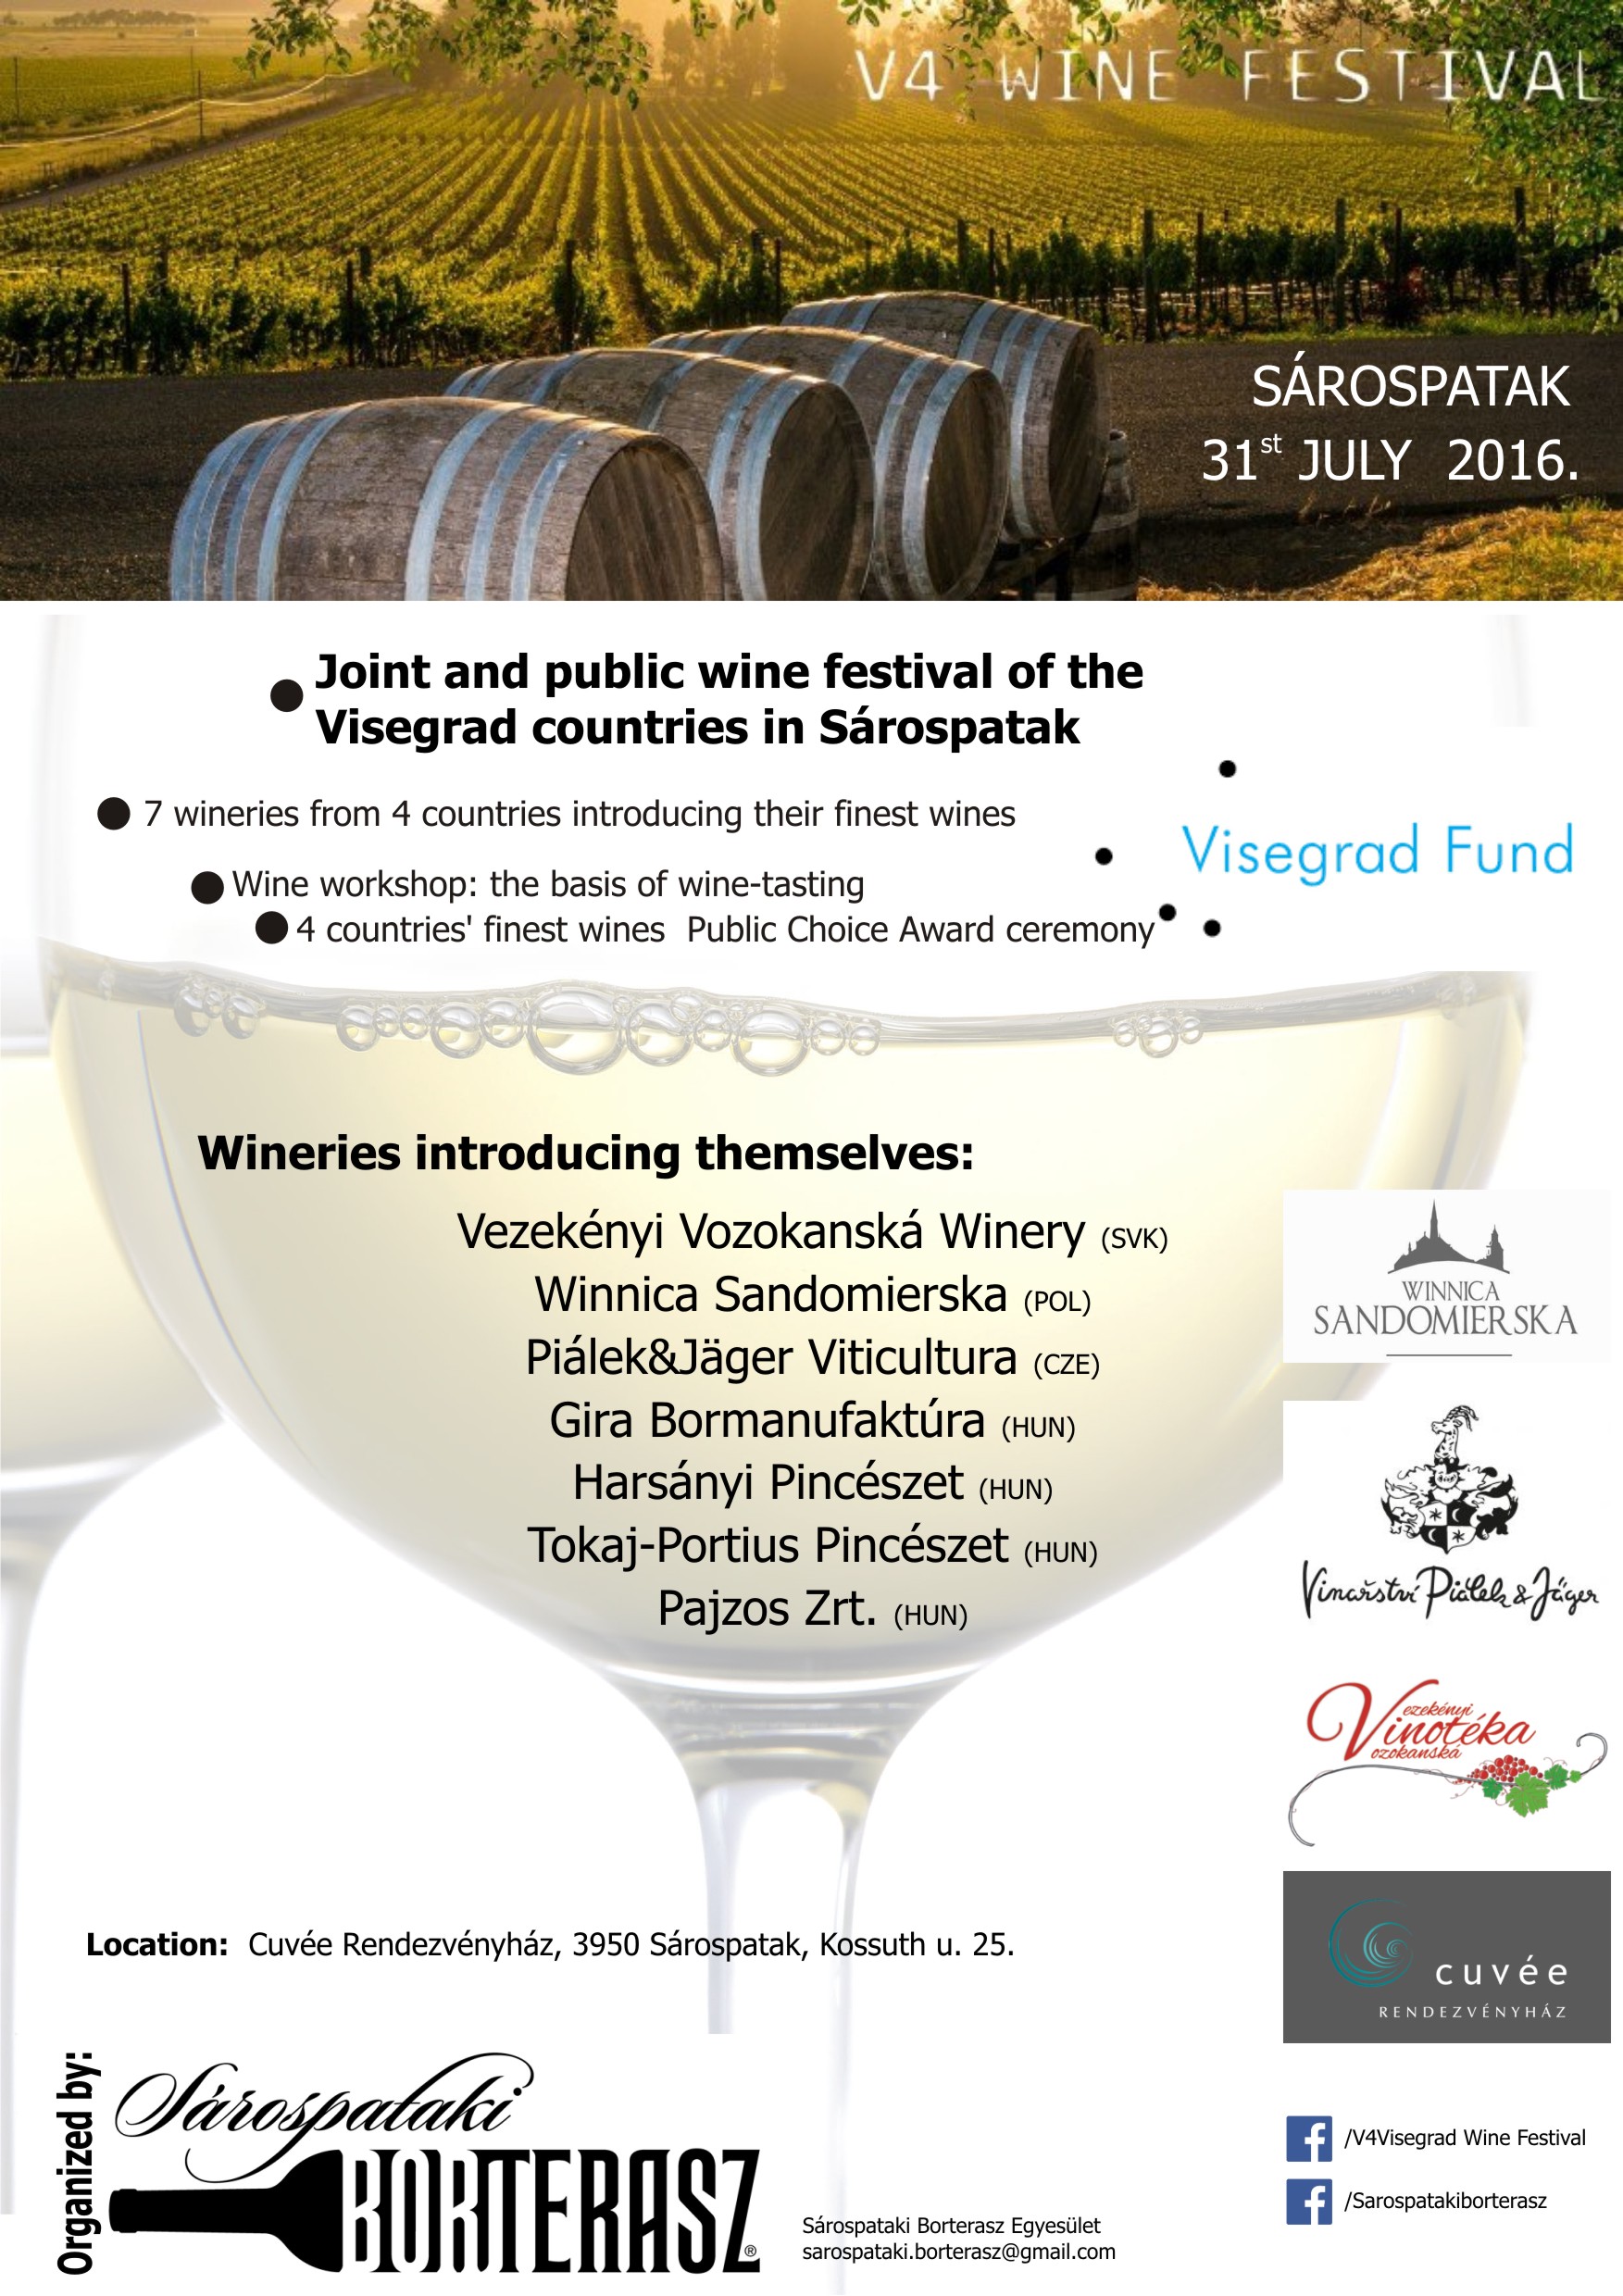 flyer for the Sárospatak v4 wine festival